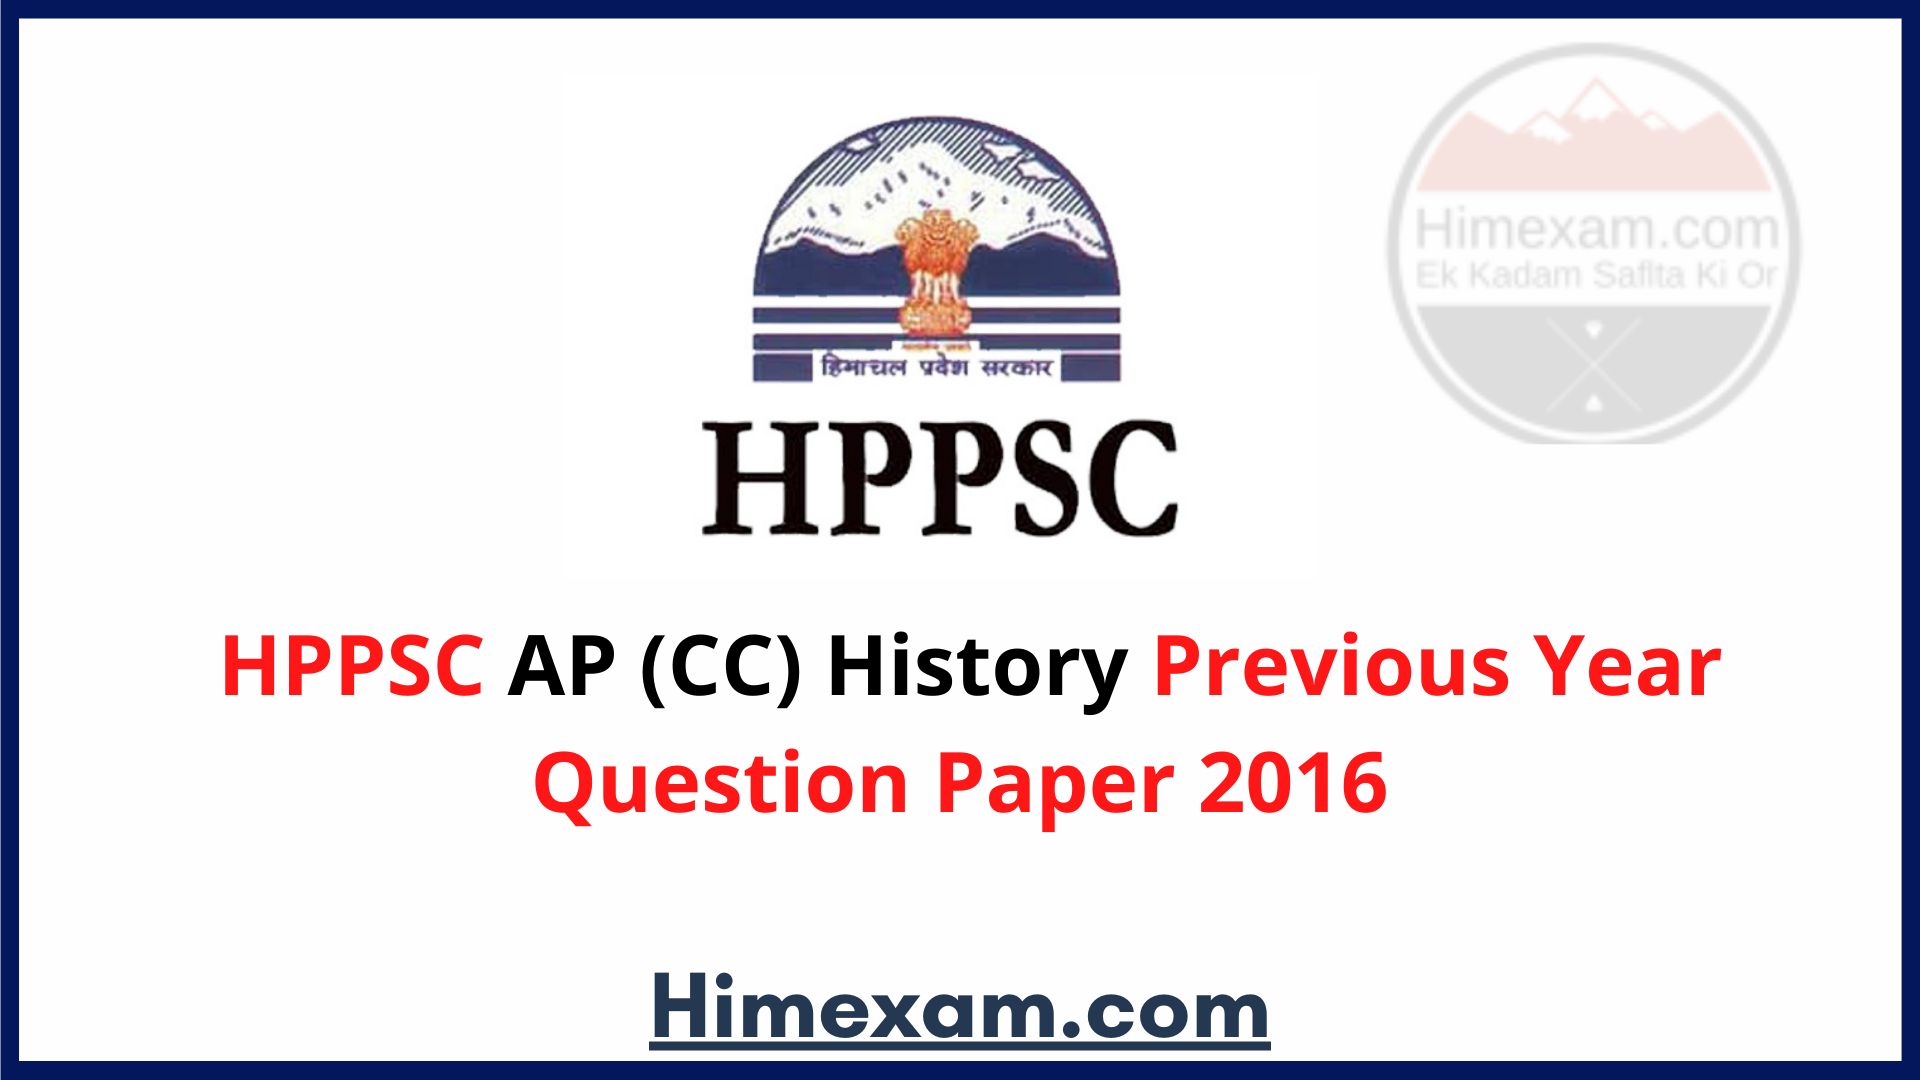 HPPSC AP (CC) History Previous Year Question Paper 2016